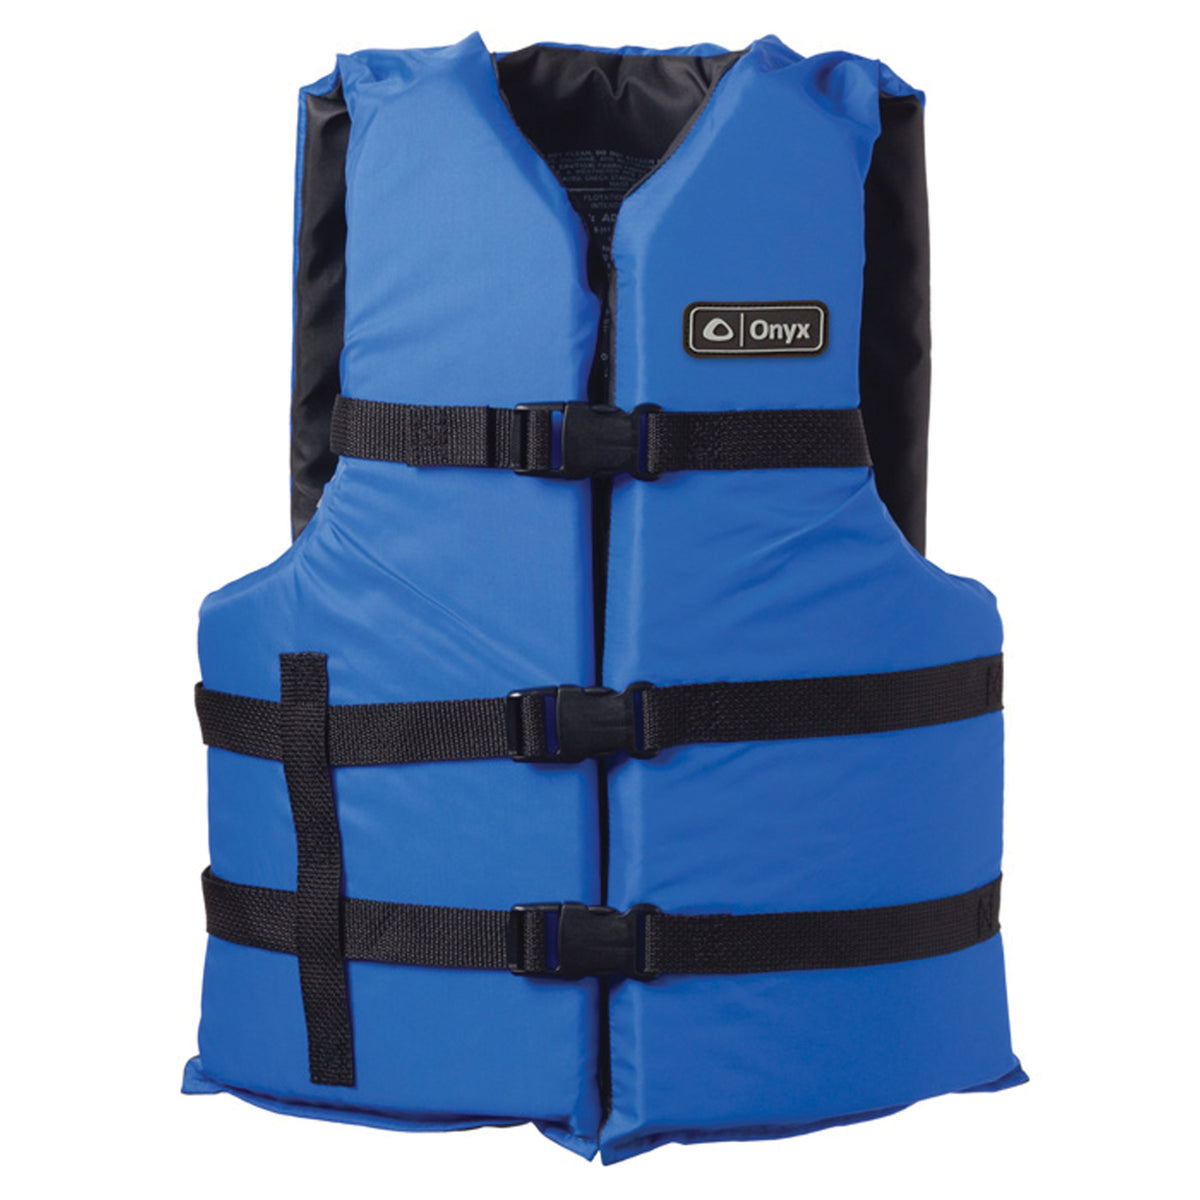 Onyx 103000-500-004-12 General Purpose Vests - Adult, Blue/Black